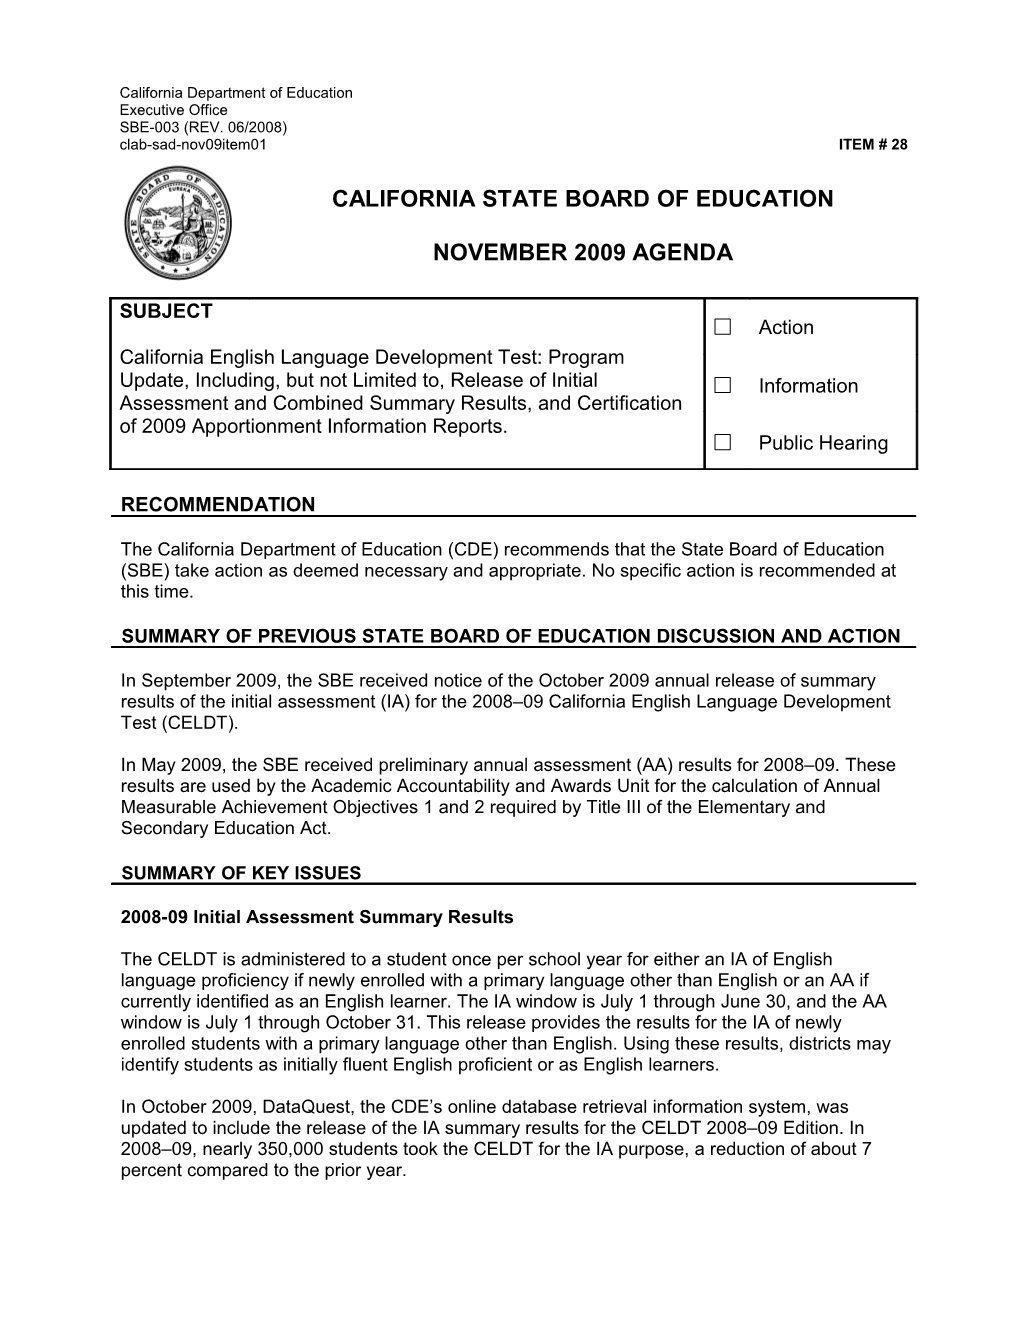 November 2009 Agenda Item 28 - Meeting Agendas (CA State Board of Education)